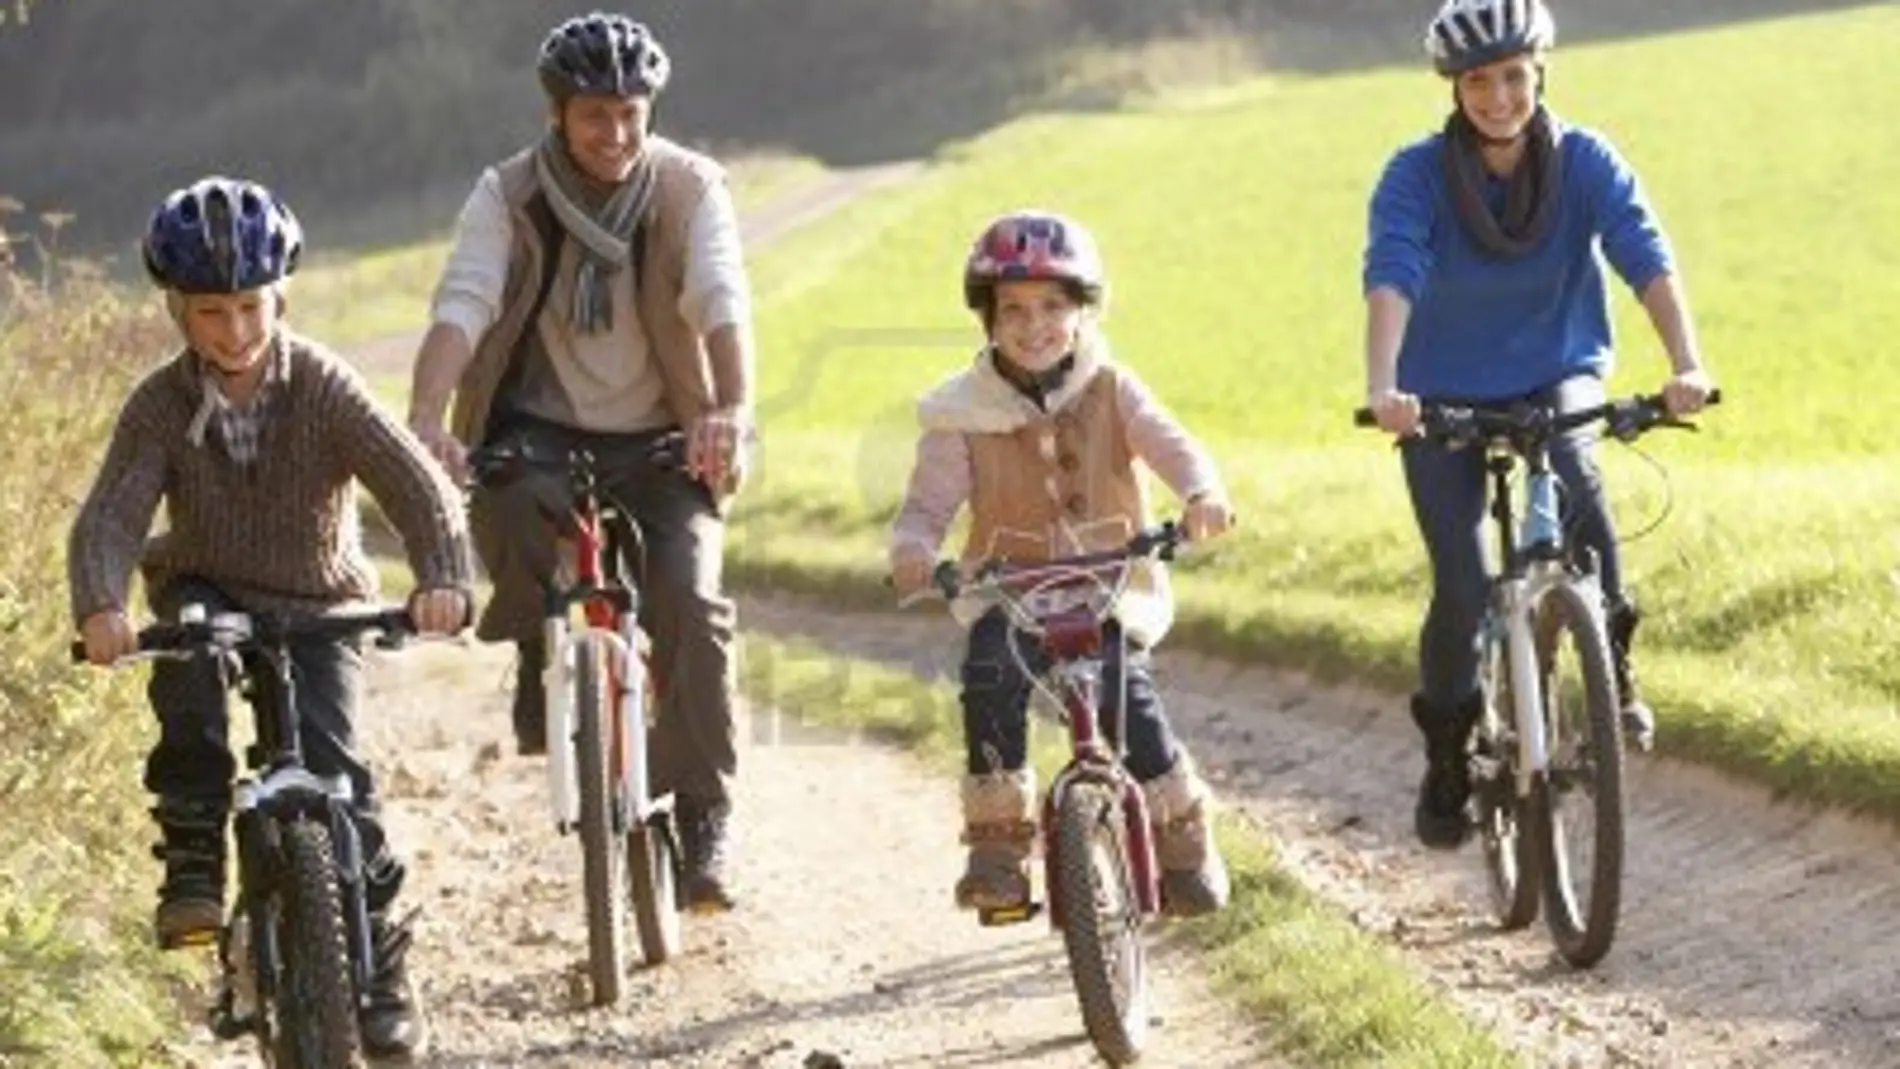 Familia montando en bicicleta